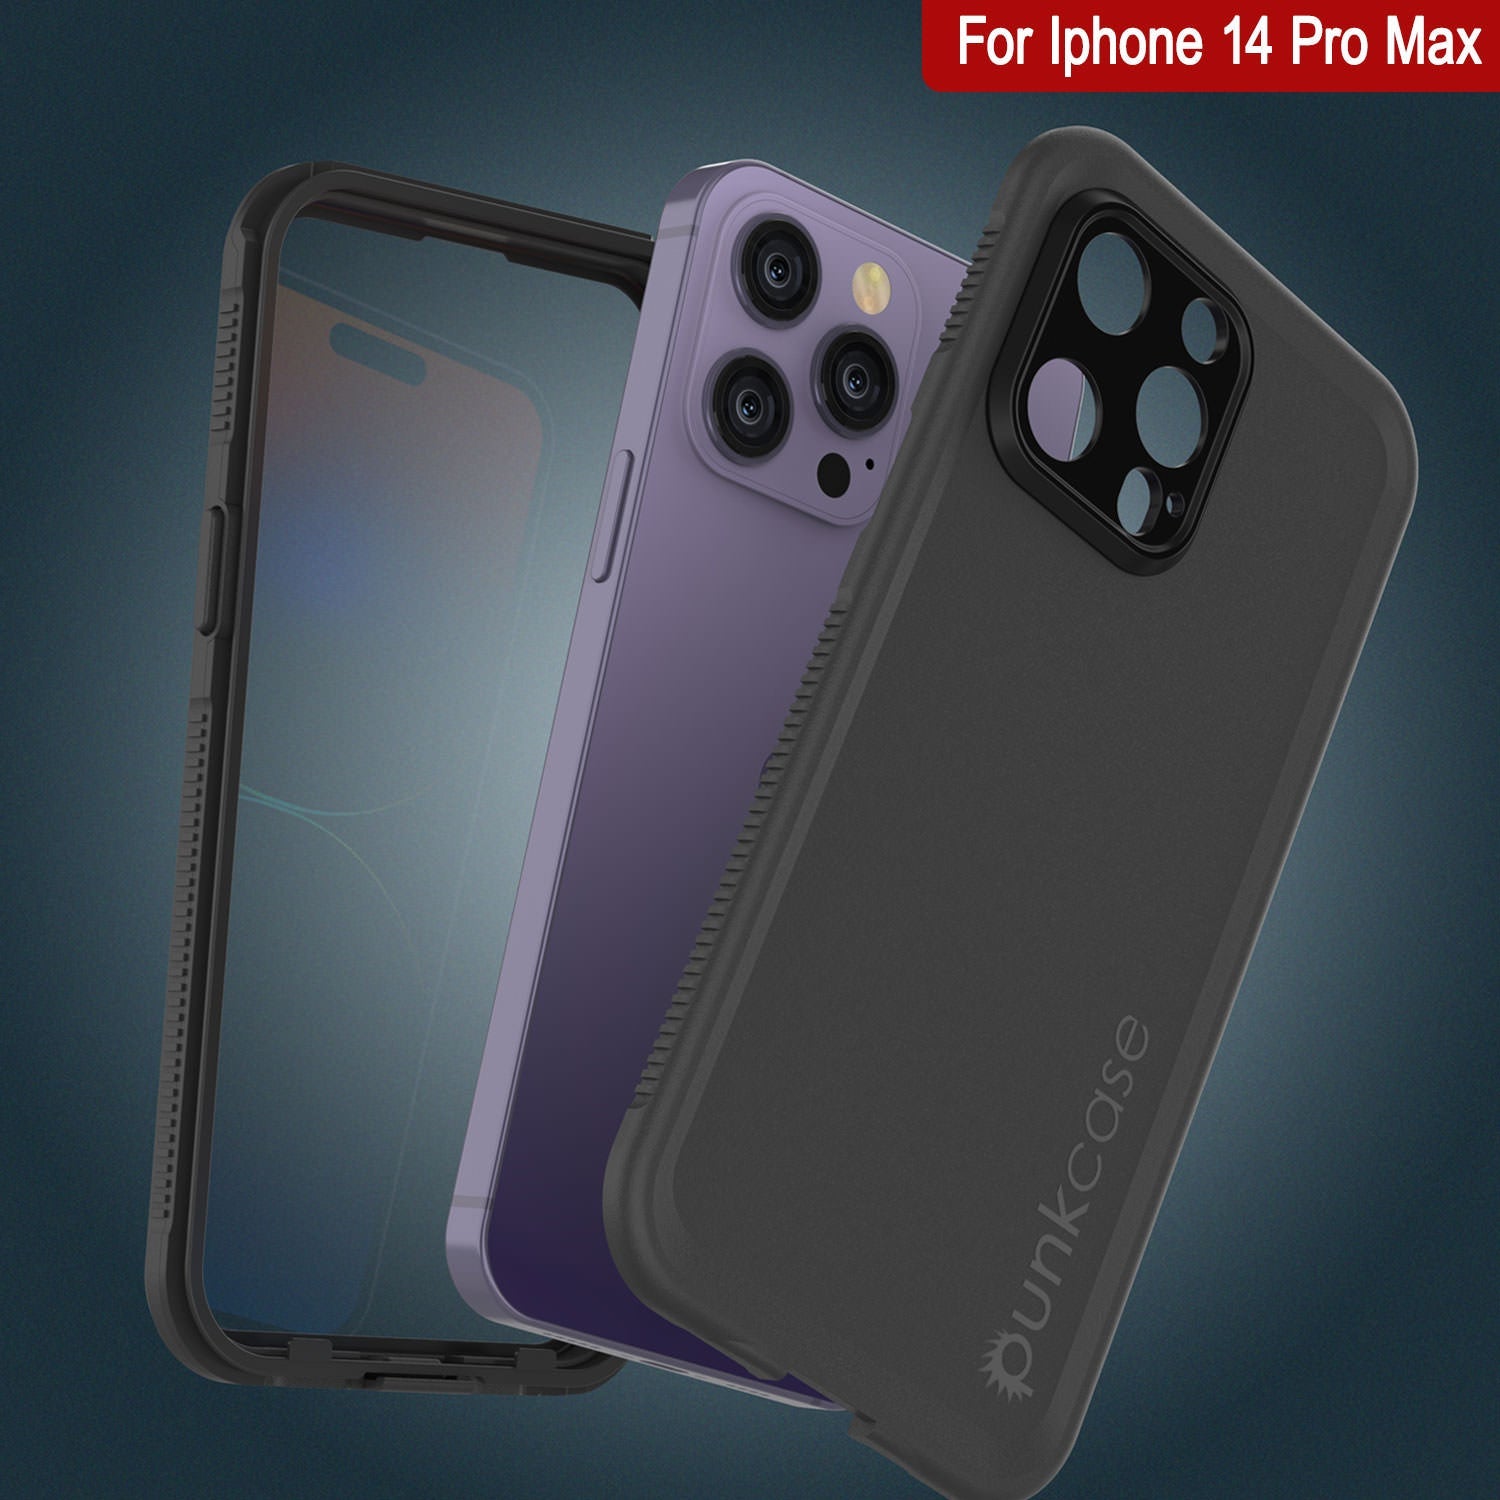 Punkcase iPhone 14 Pro Max Waterproof Case [Aqua Series] Armor Cover [Black]